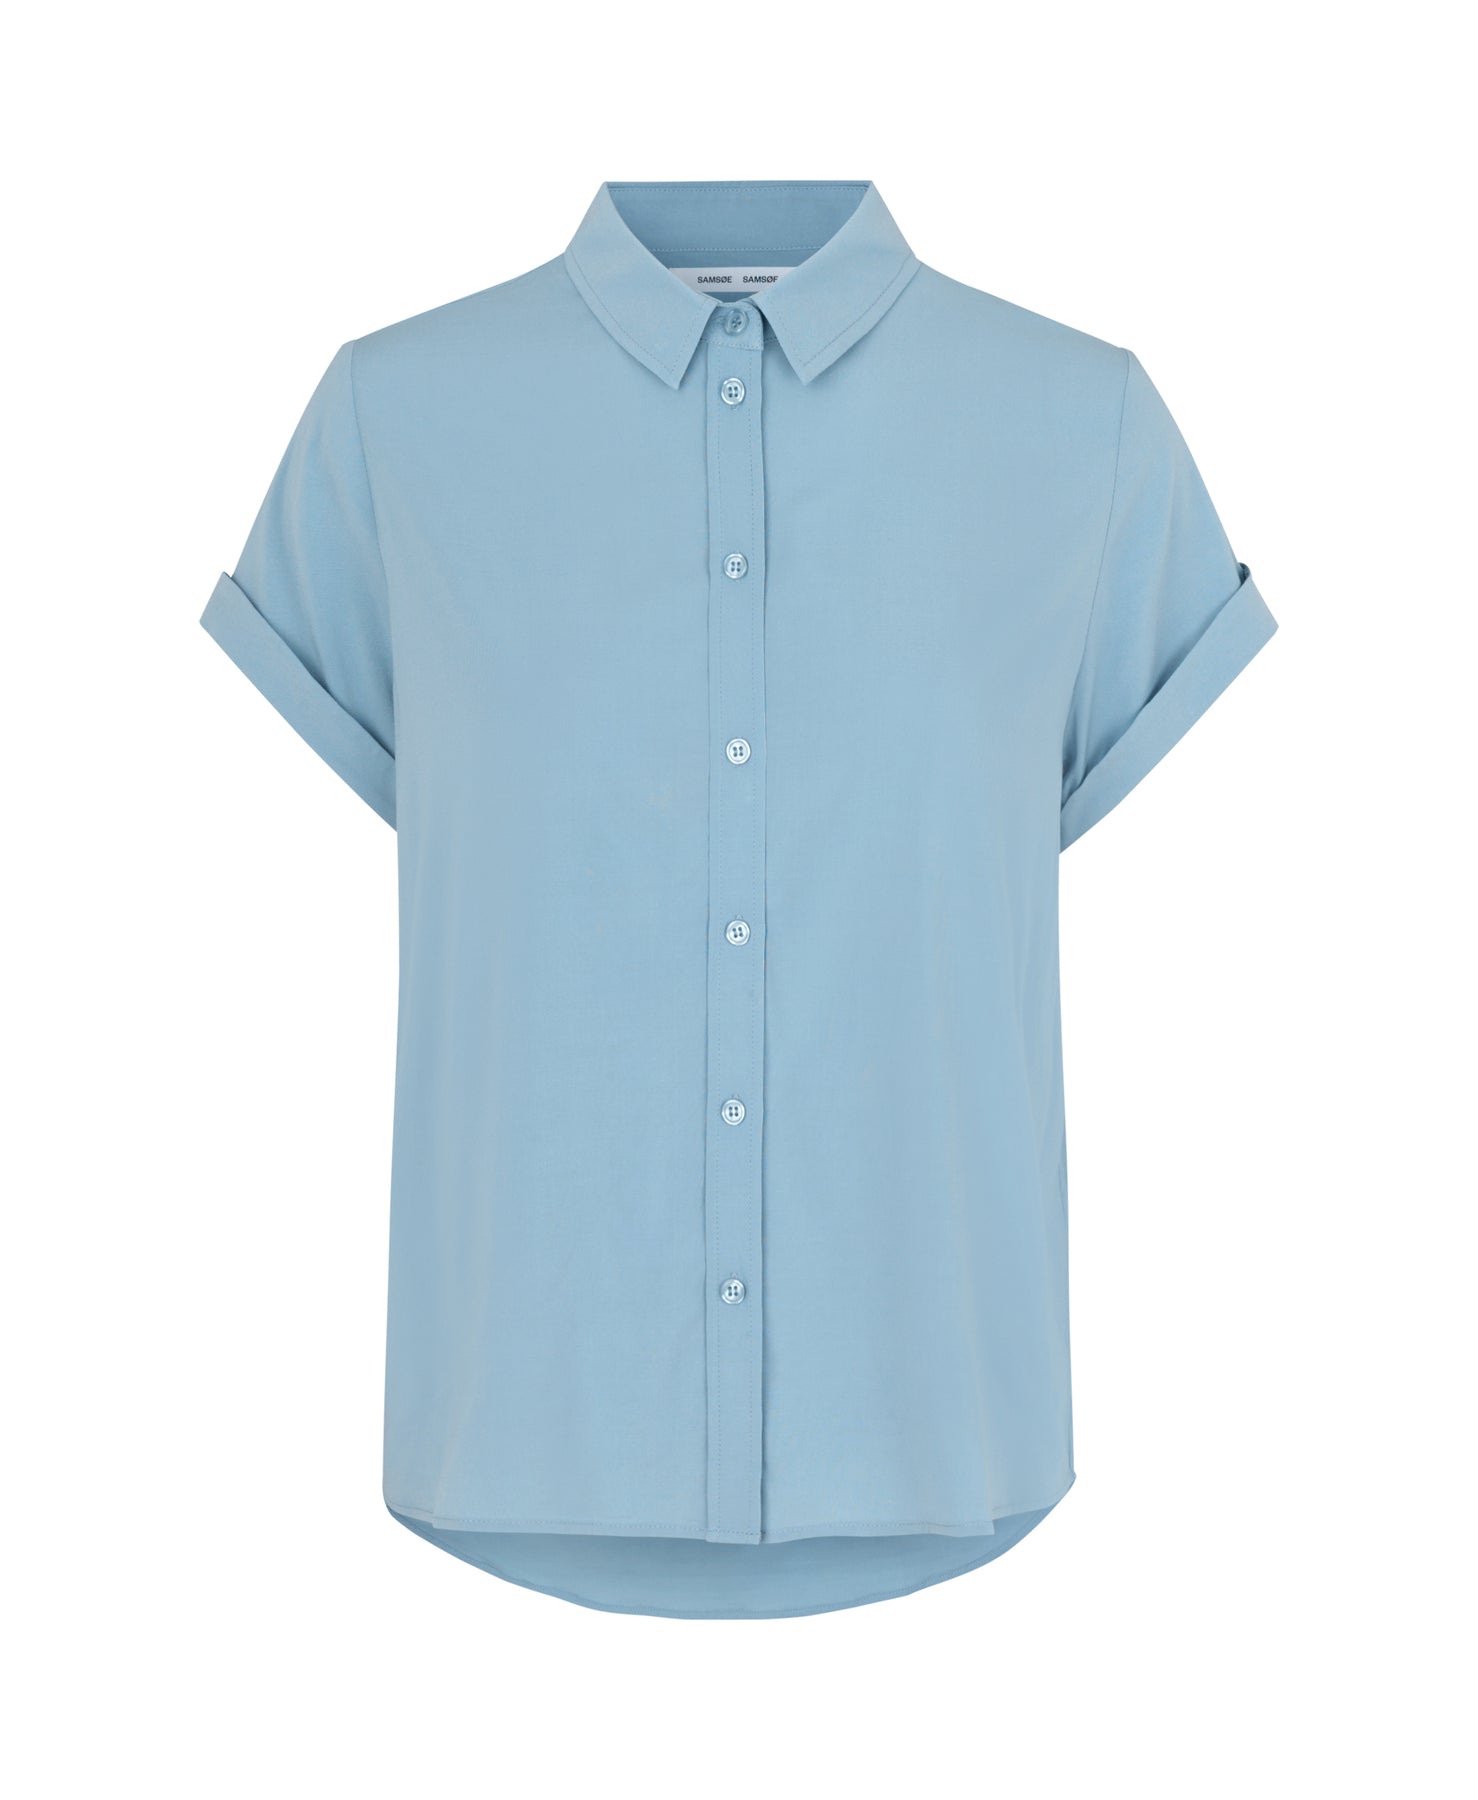 Majan SS Shirt - Dusty Blue